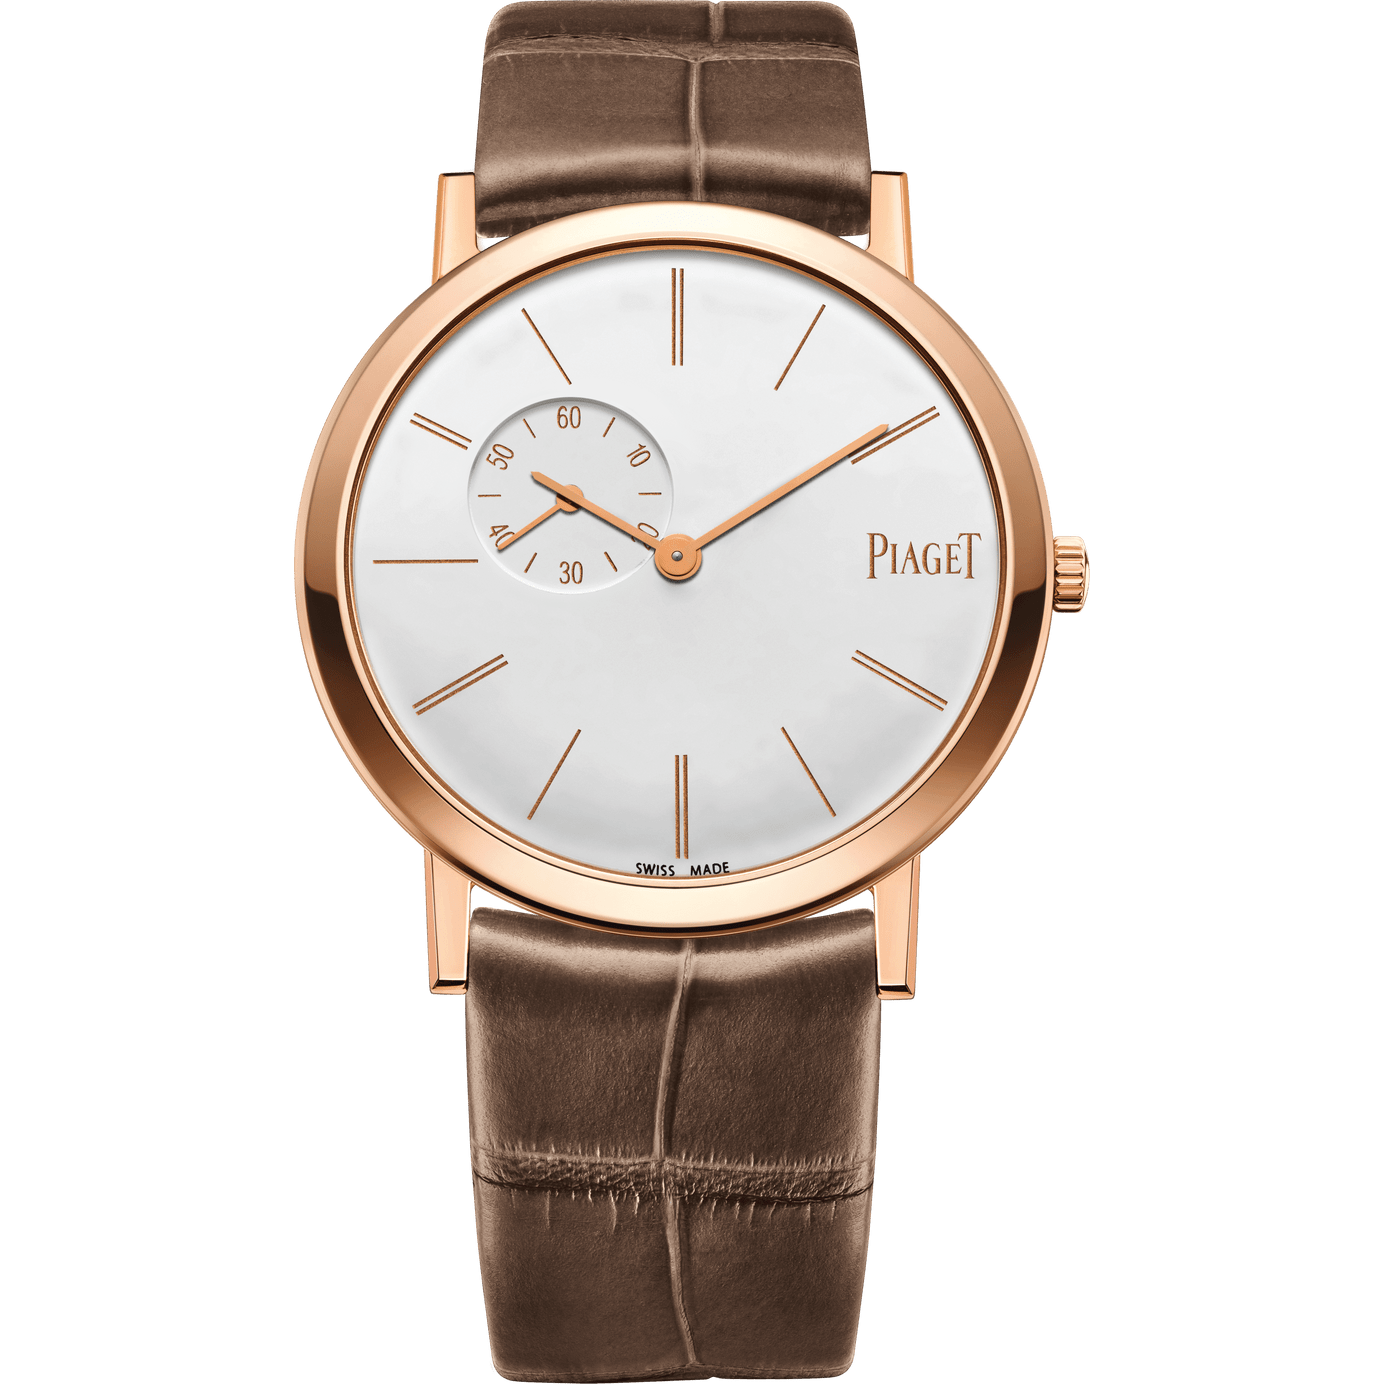 Altiplano Origin watch